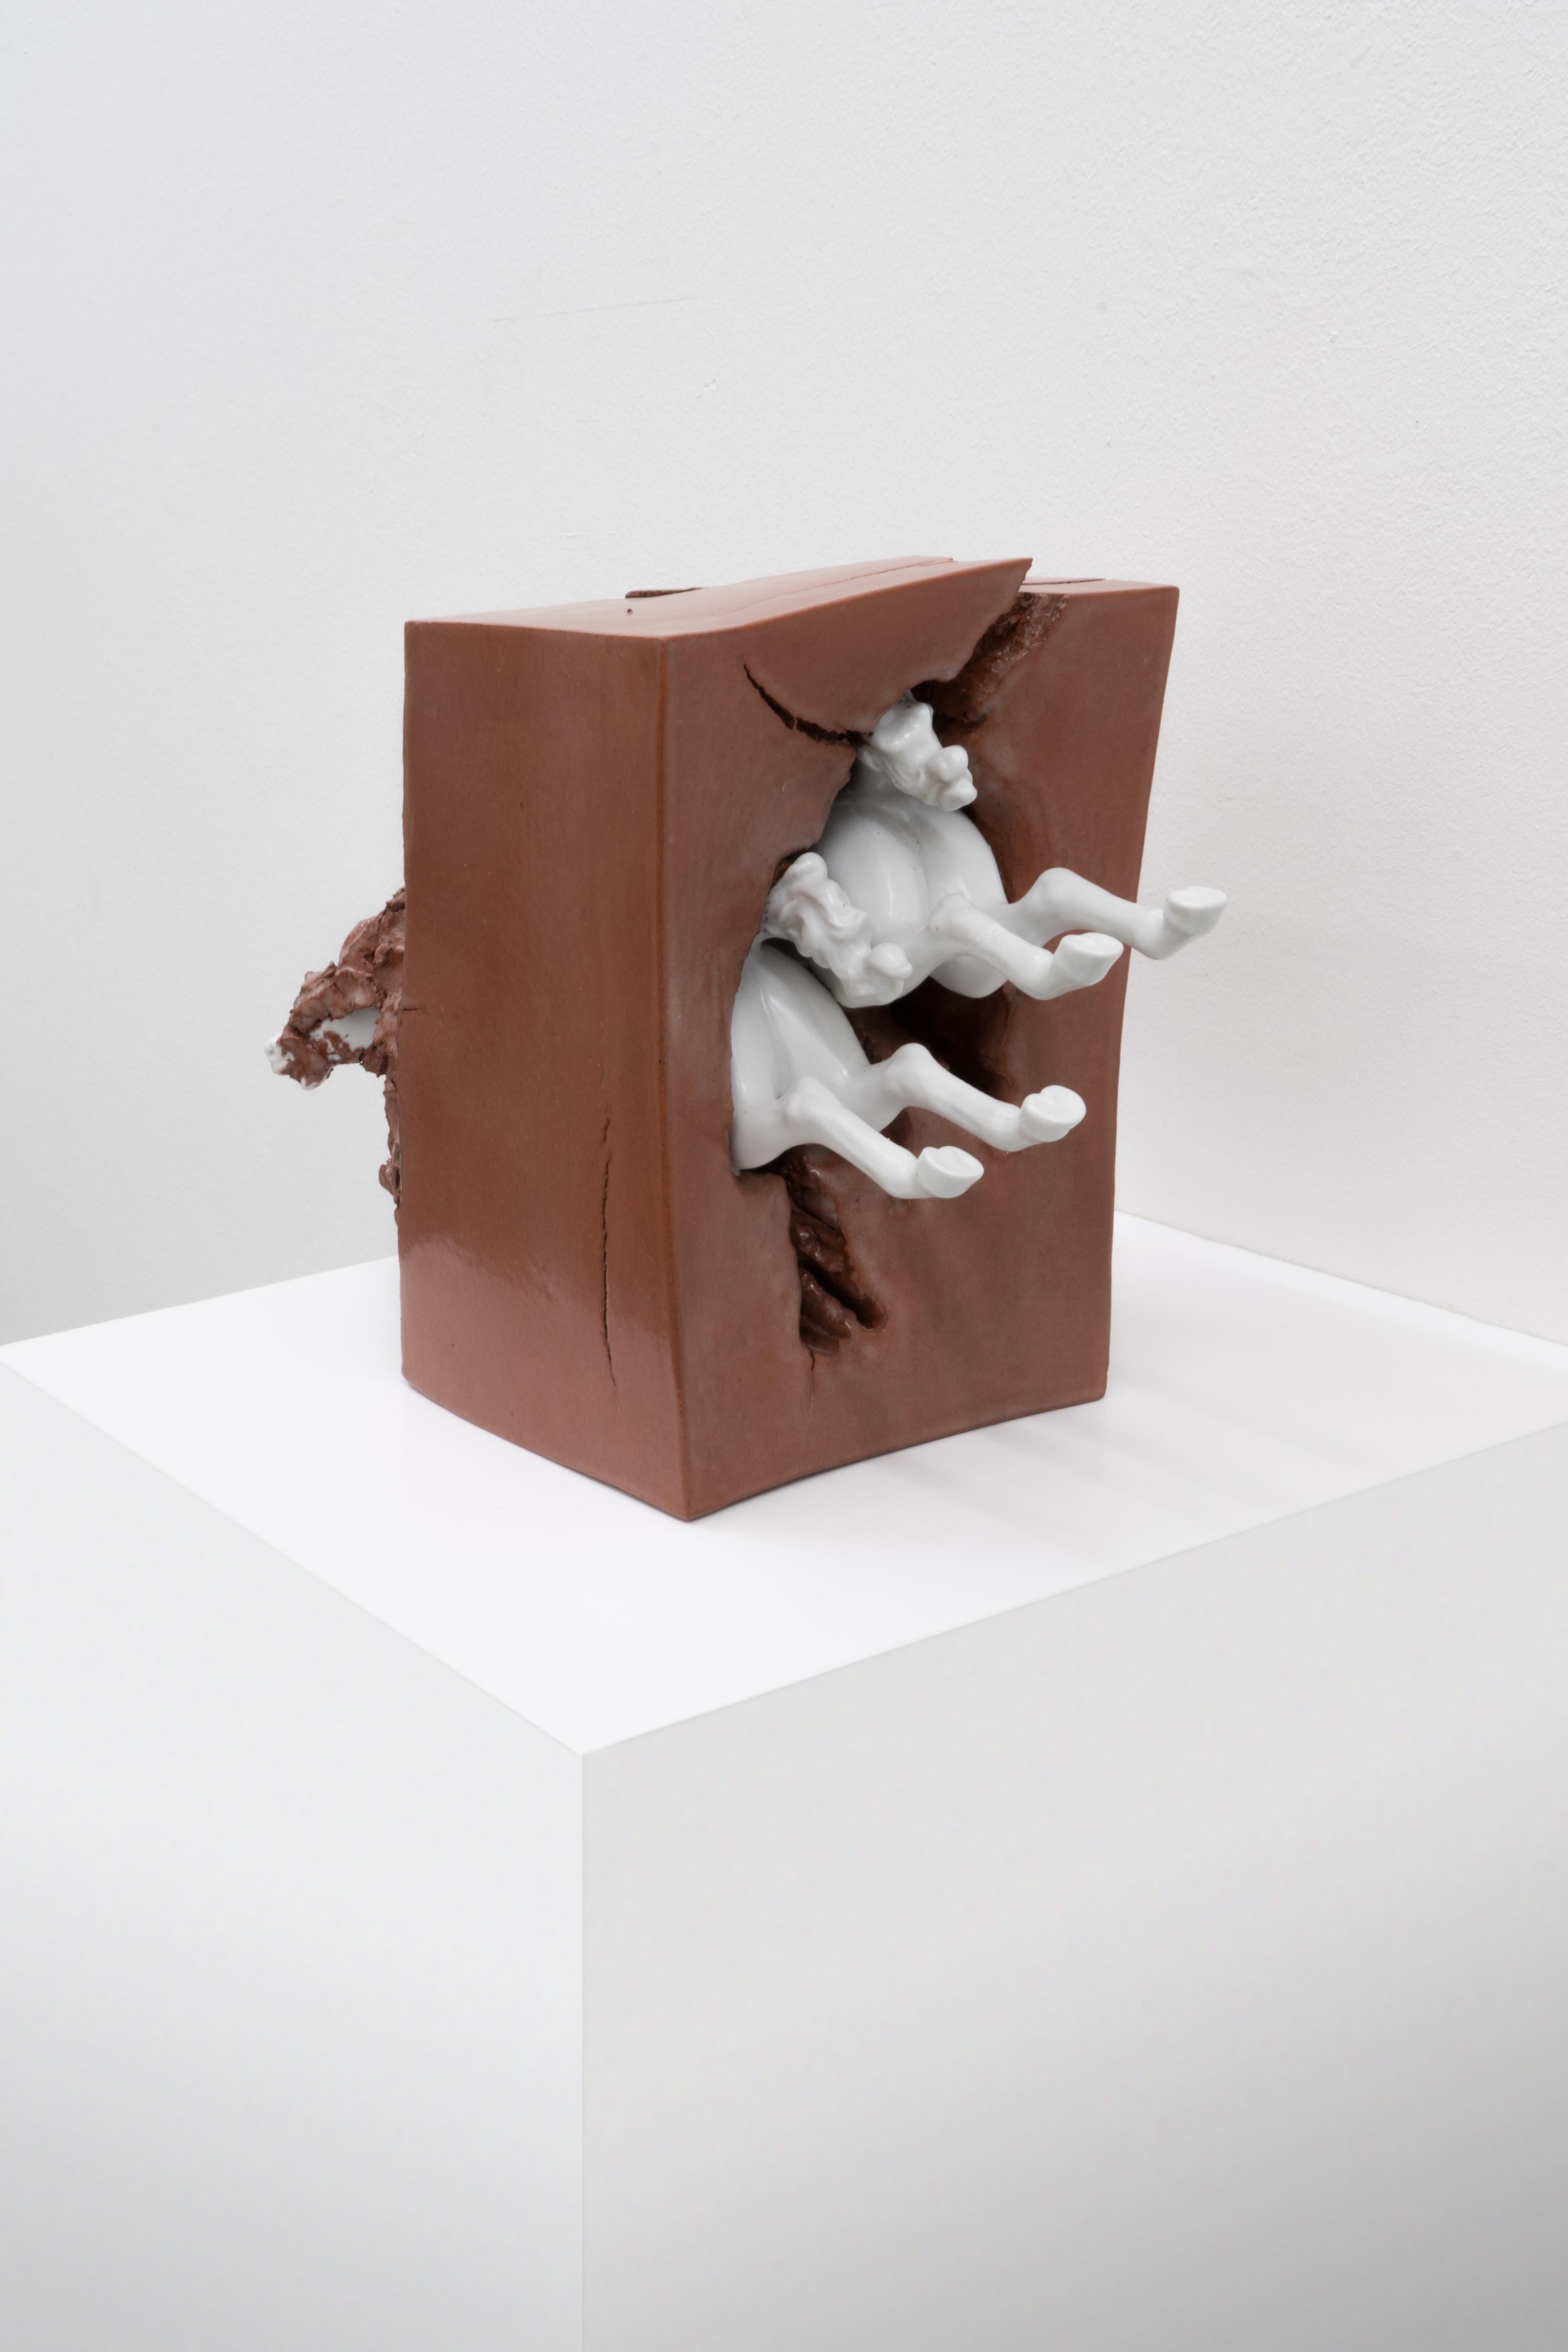 Dana Widawski Figurative Sculpture - Don‘t stop running horses